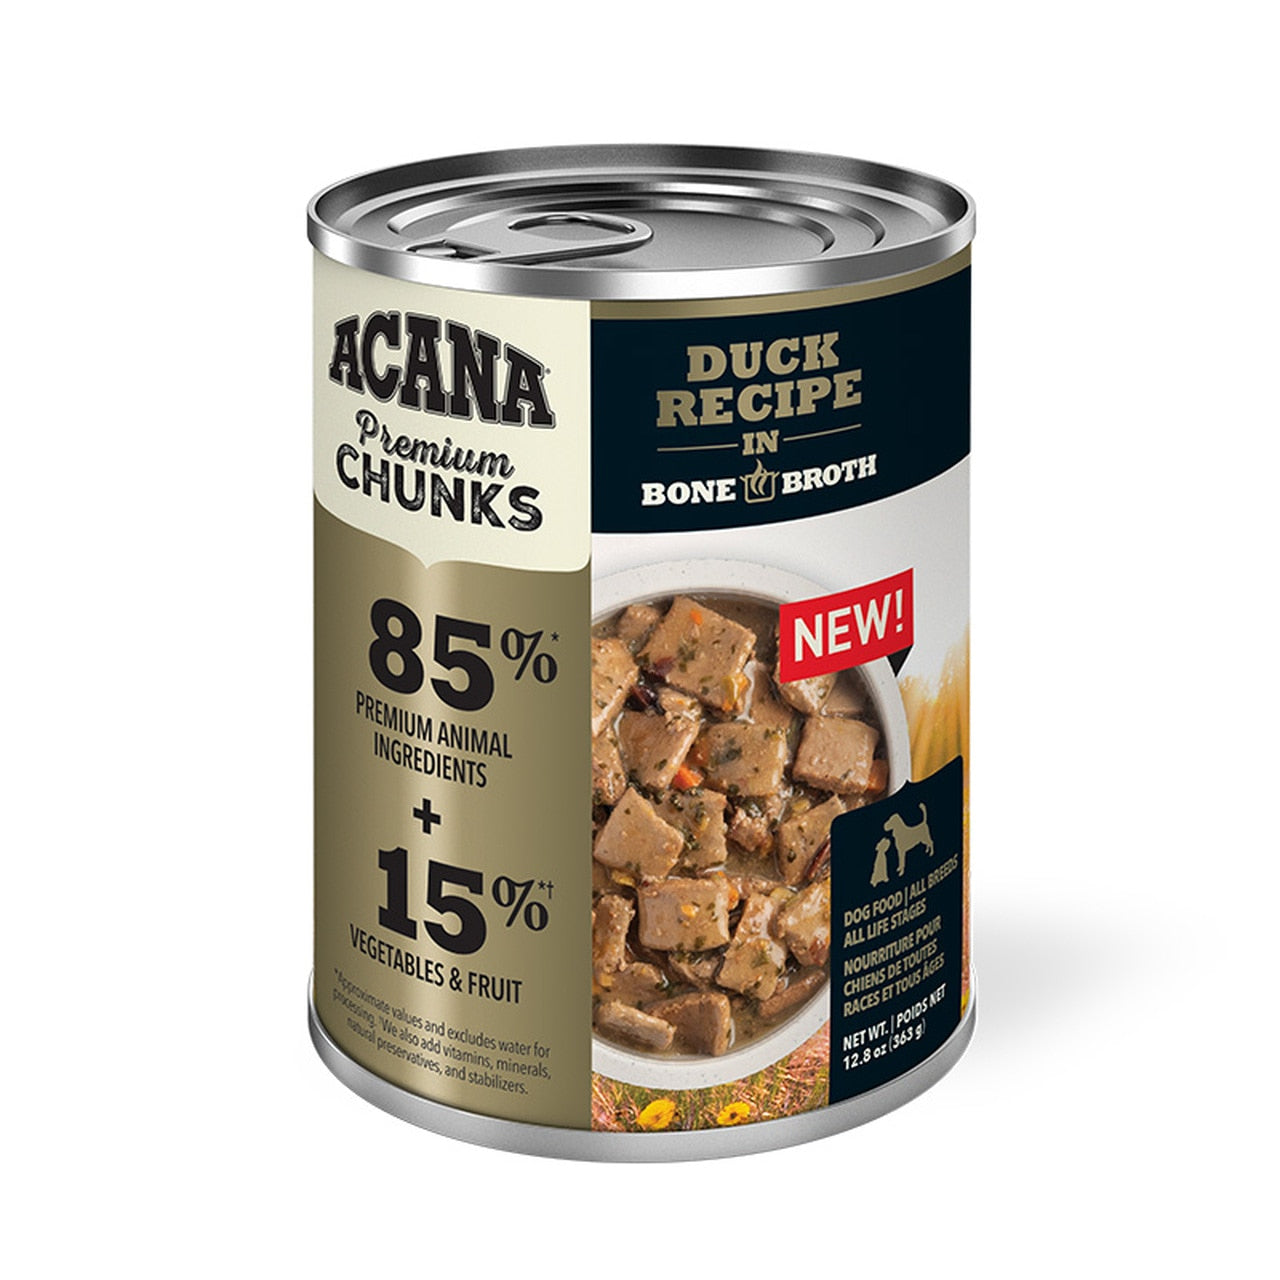 ACANA Premium Chunks Duck Recipe in Bone Broth Canned Dog Food